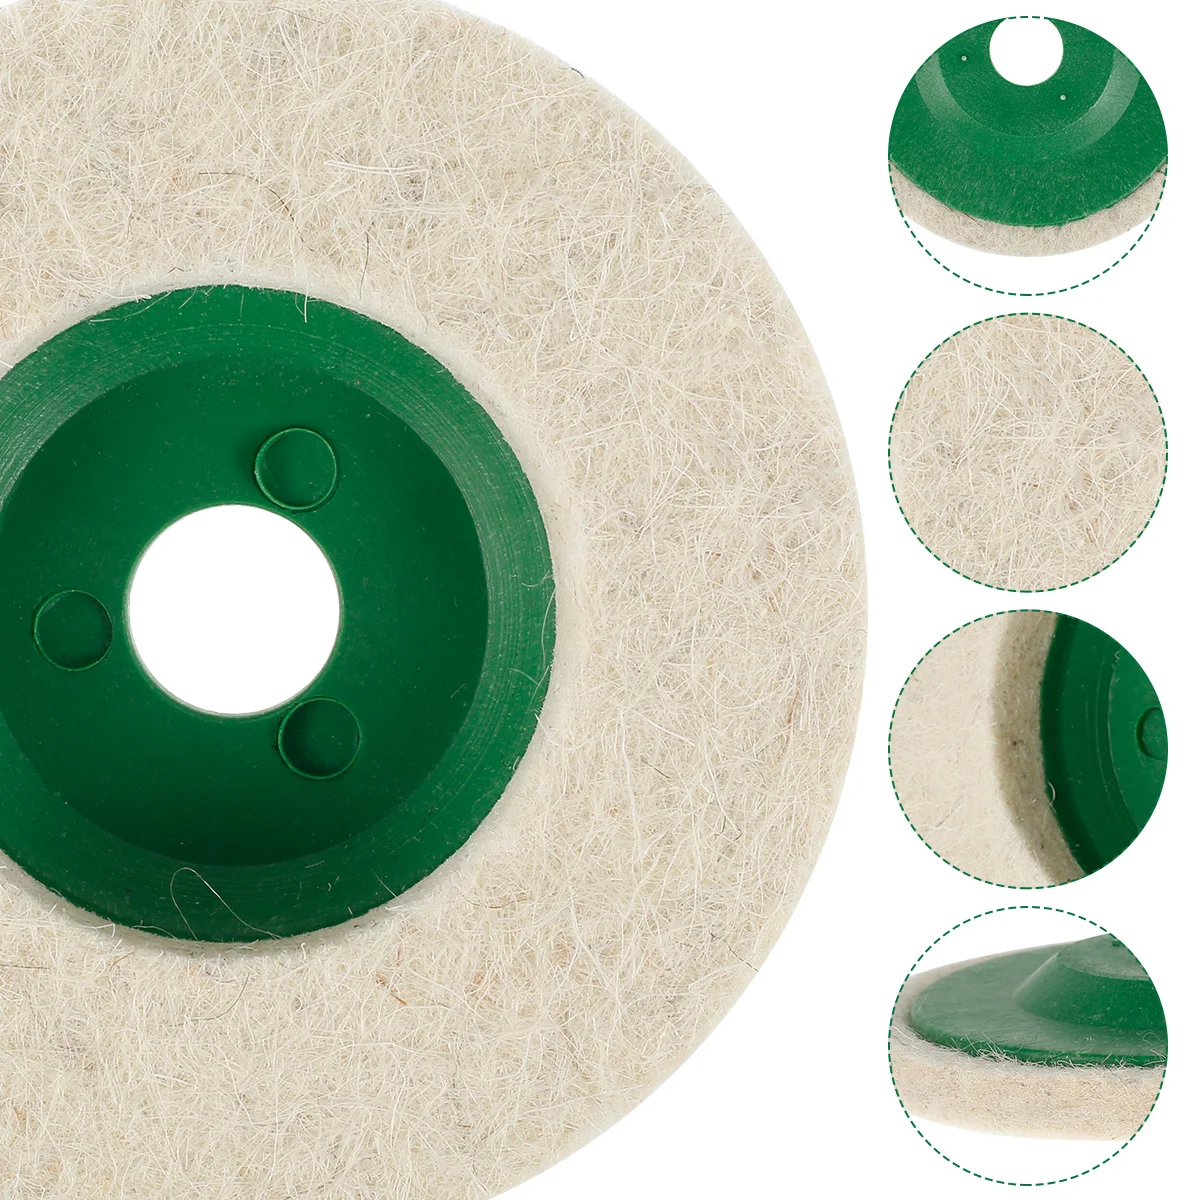 US 10~20 Pack 4'' Wool Finishing Polishing Wheel Disc Buffing Pads Angle Grinder, Green